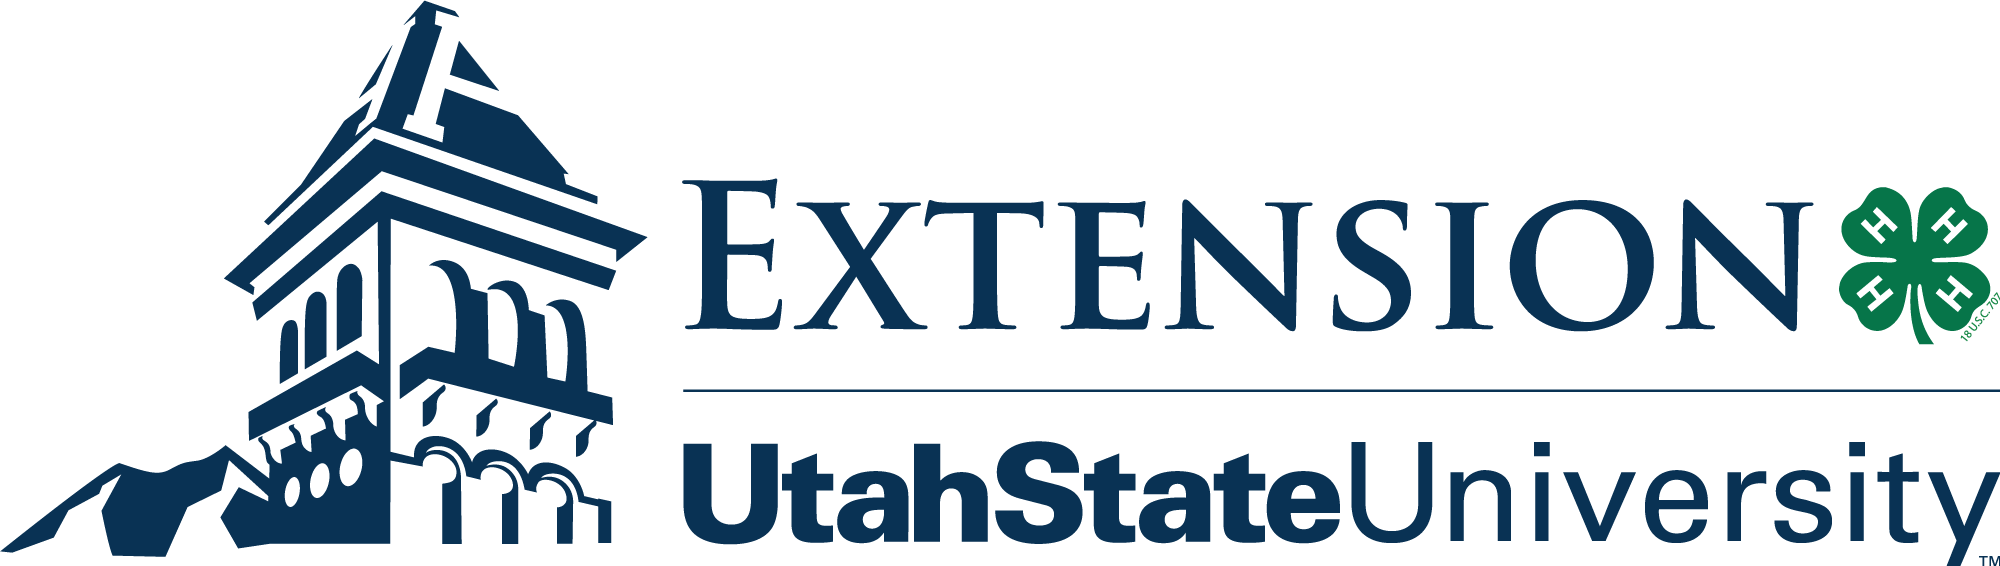 extension_logo